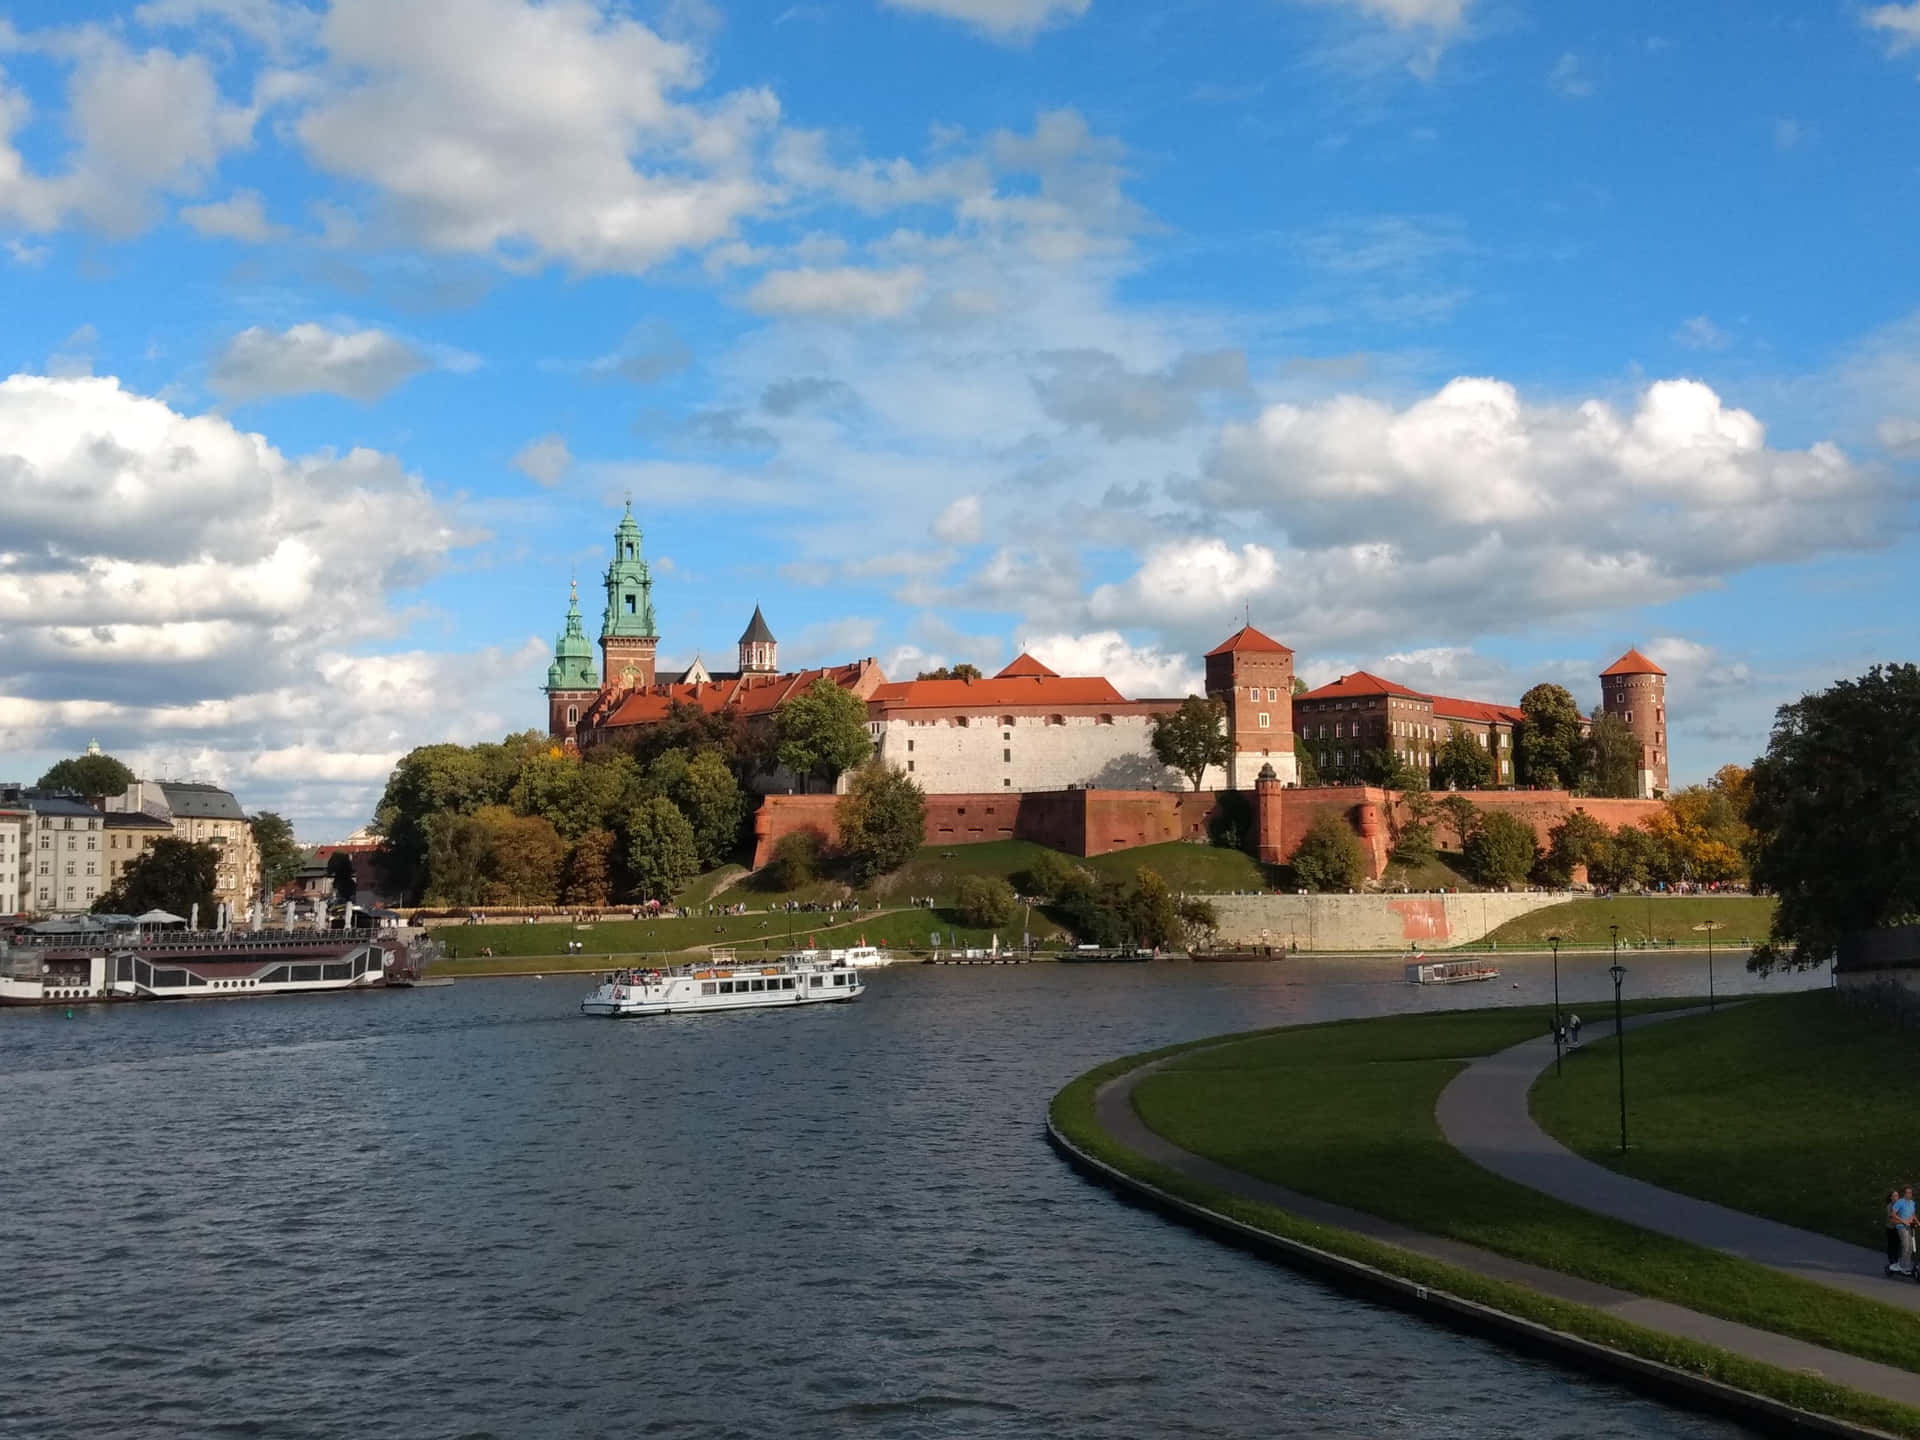 Wawel Castle Boats Sailing On River Wallpaper